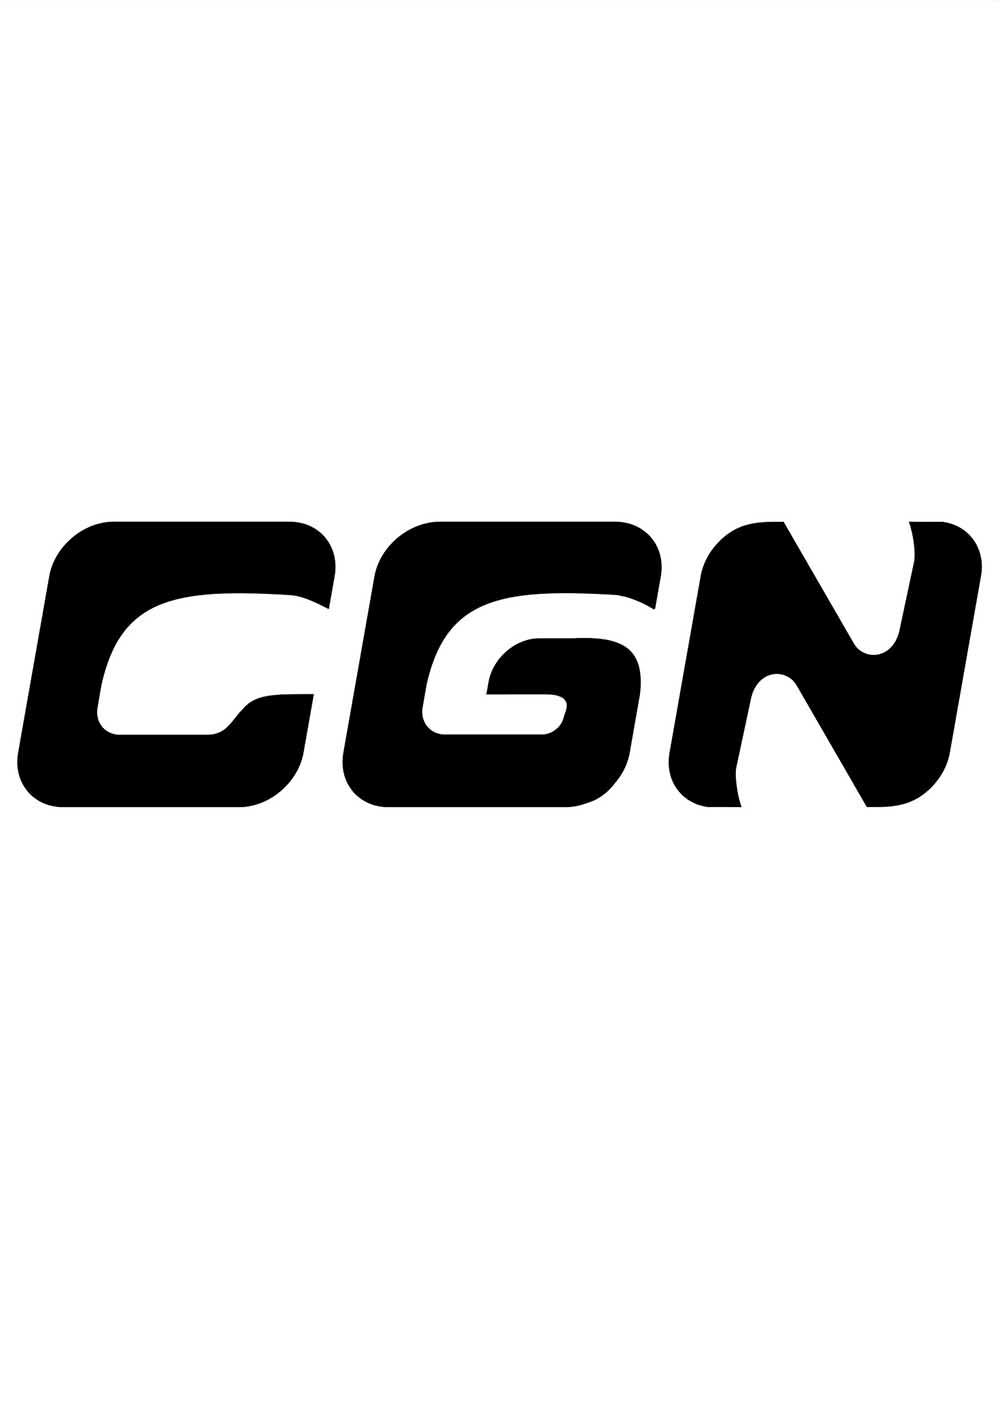 CGN商标查询